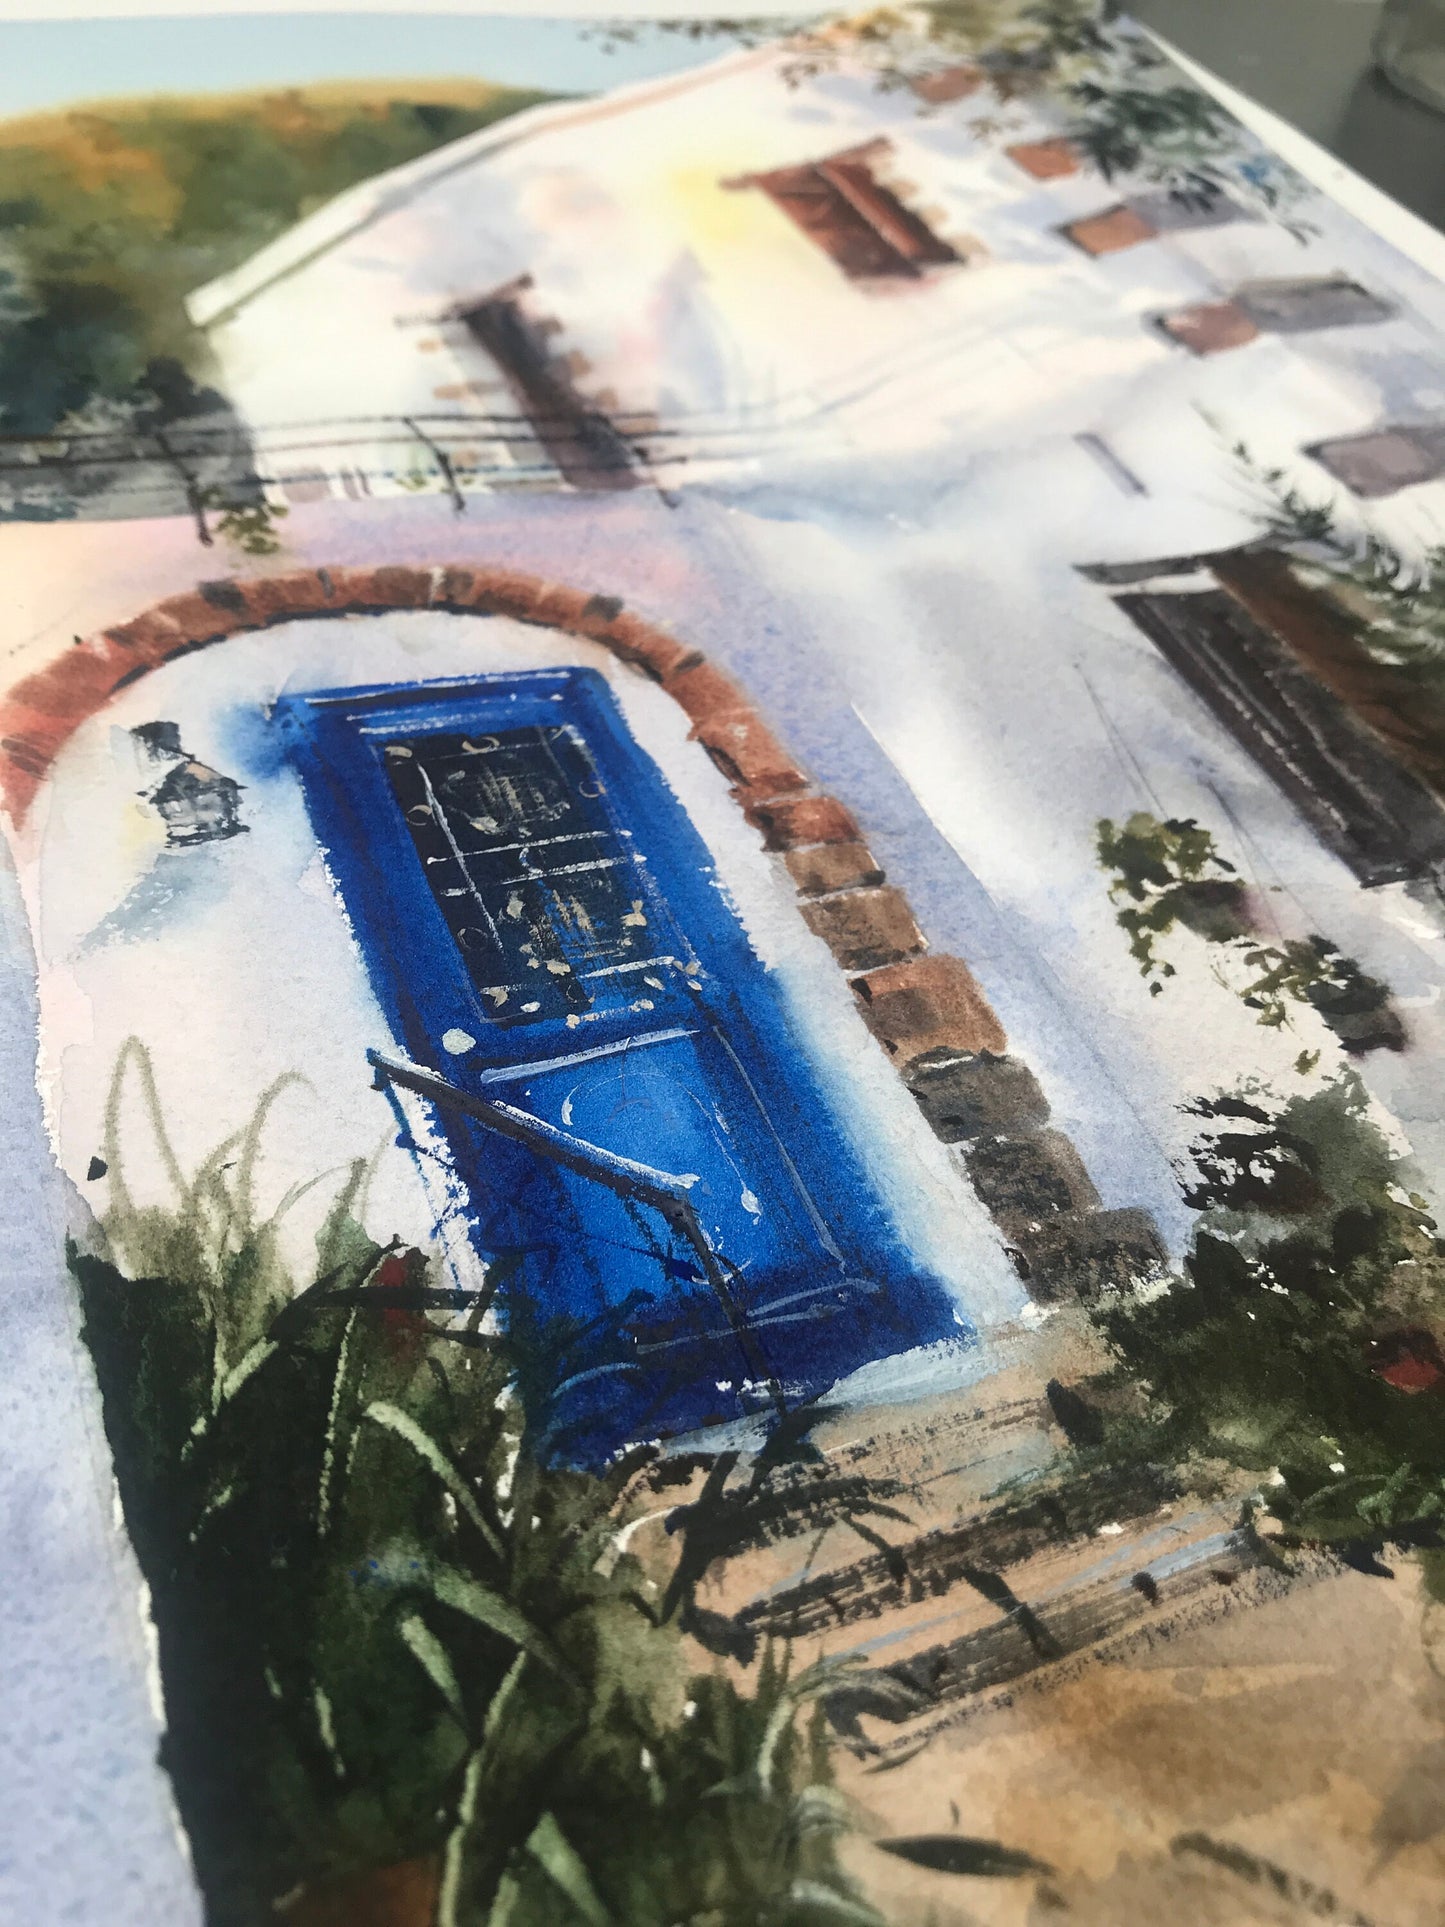 Greek Coastal City Painting Original, Sunset Watercolor Artwork, Greece Coast Village, Blue Door Wall Art, Travel Gift